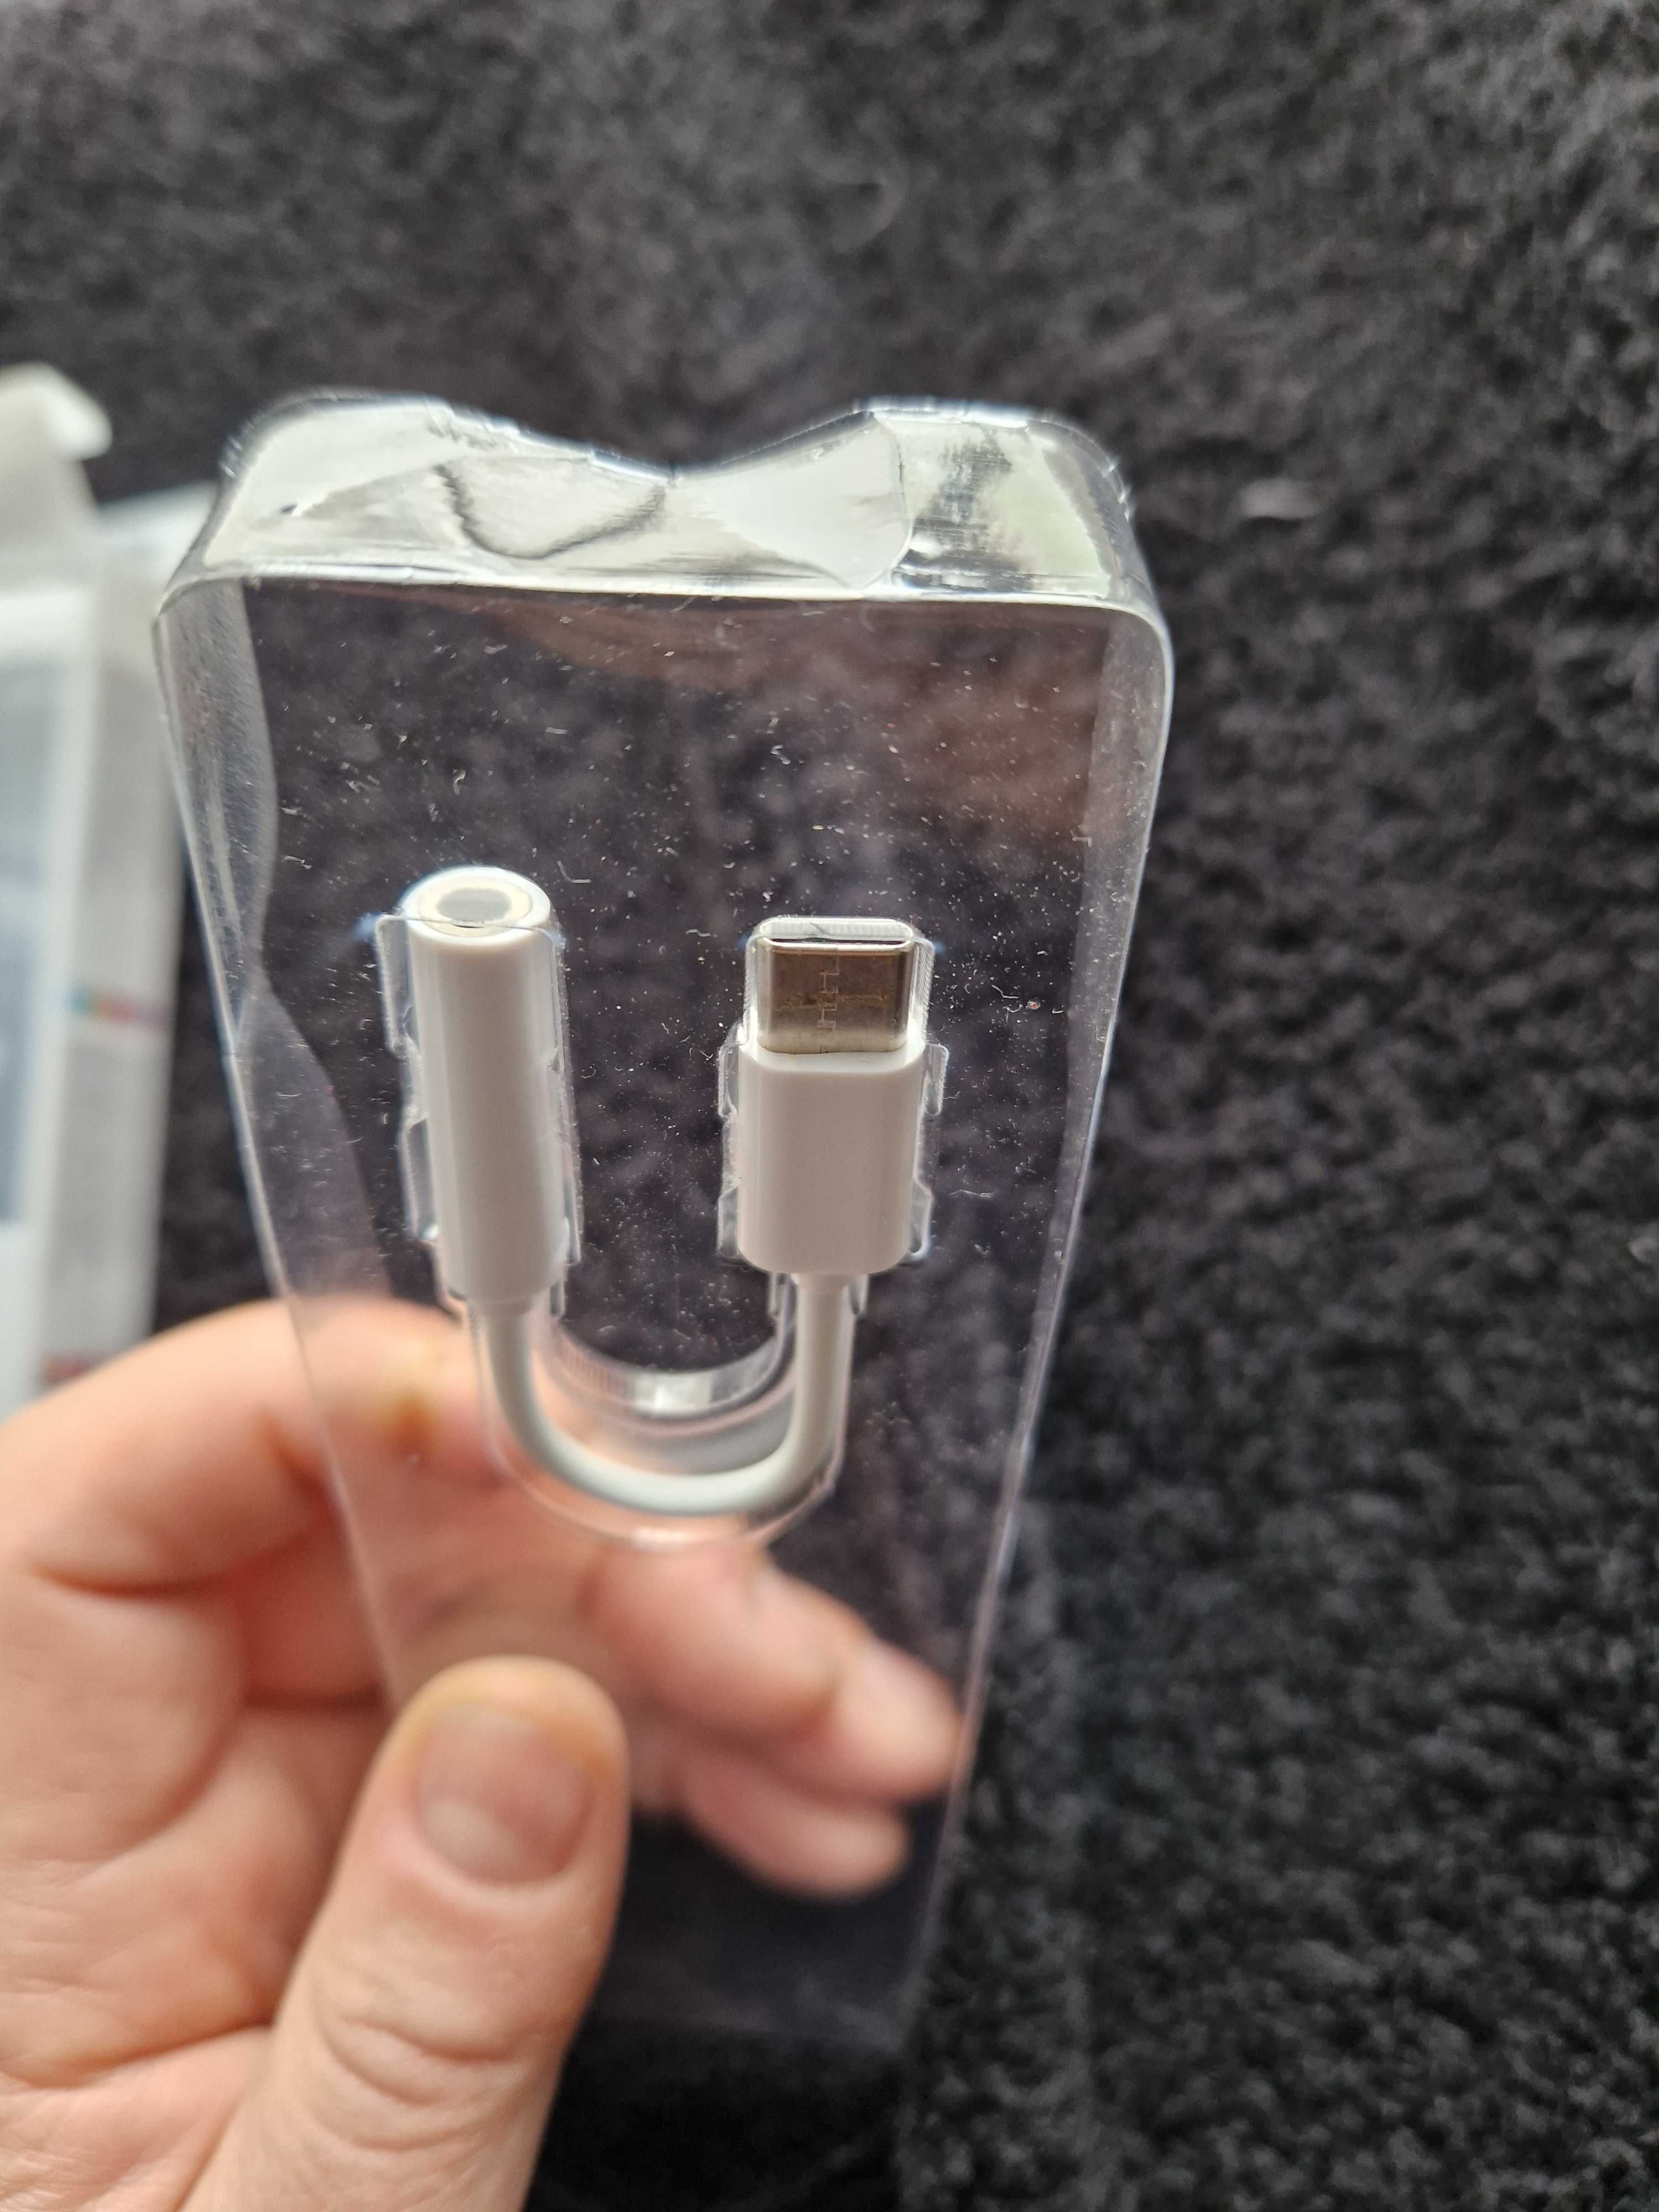 NOVO adaptador auscultadores para telemóvel Type C mini USB mini Jack